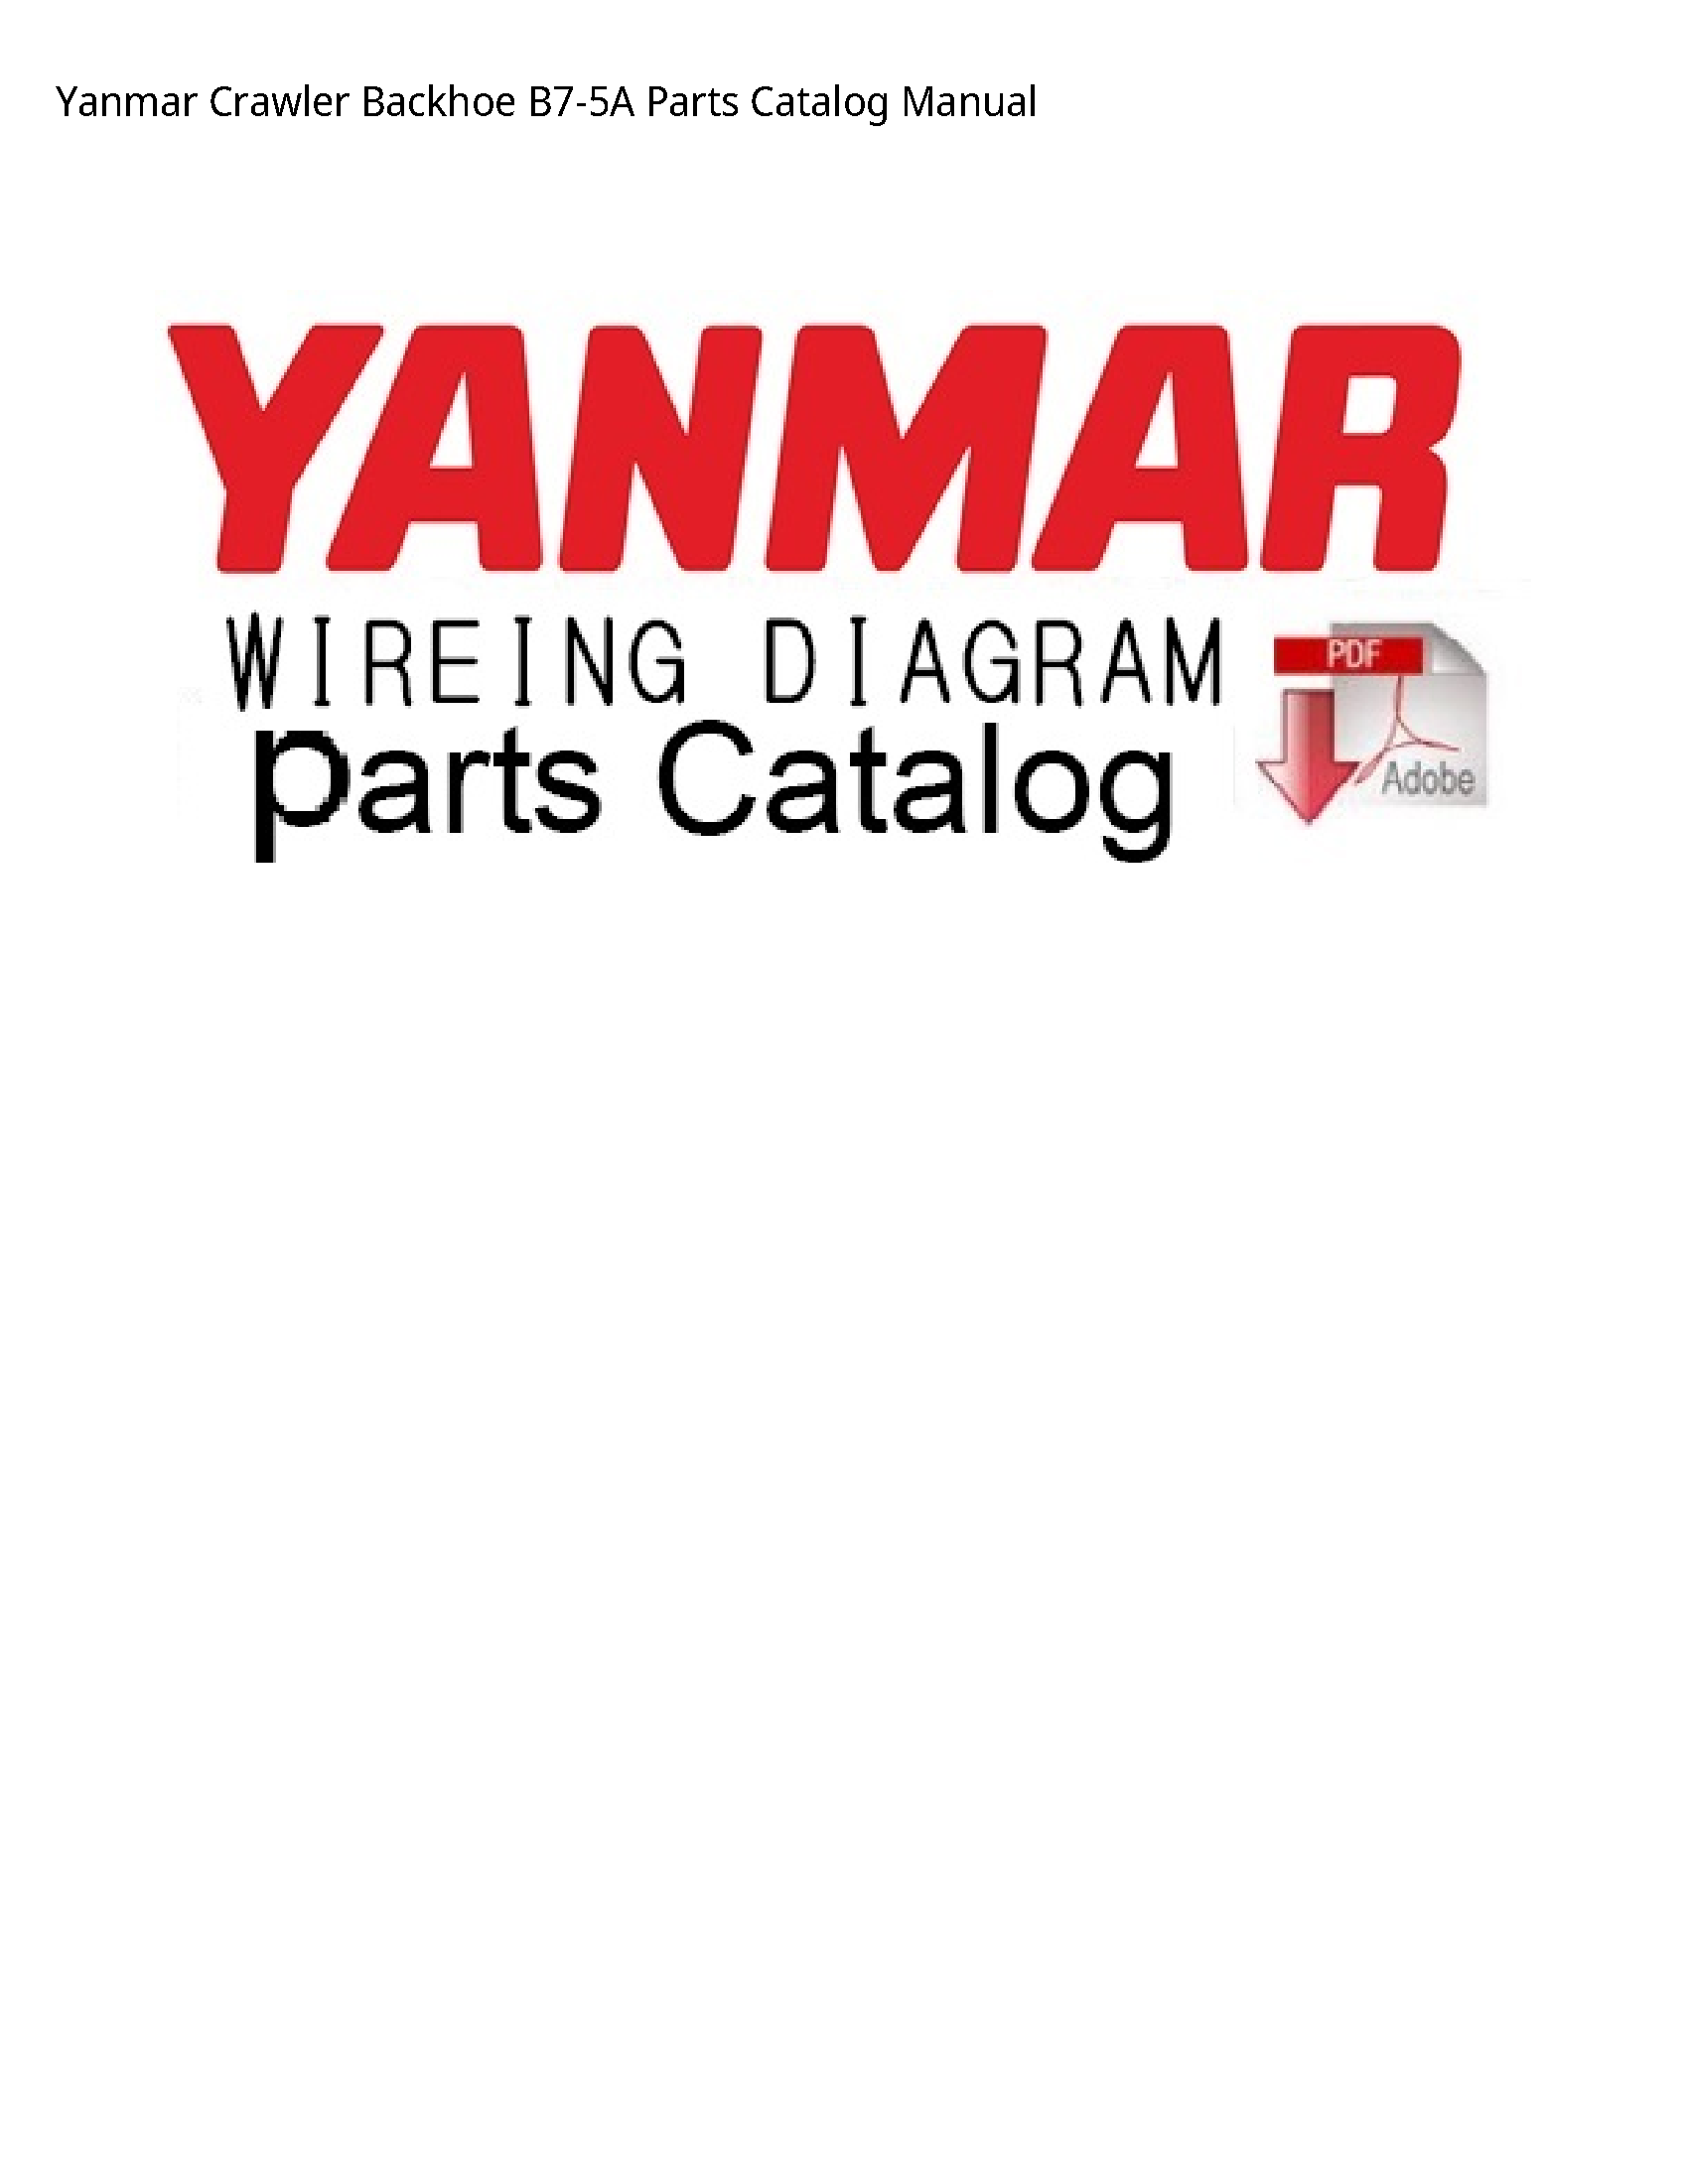 Yanmar B7-5A Crawler Backhoe Parts Catalog manual